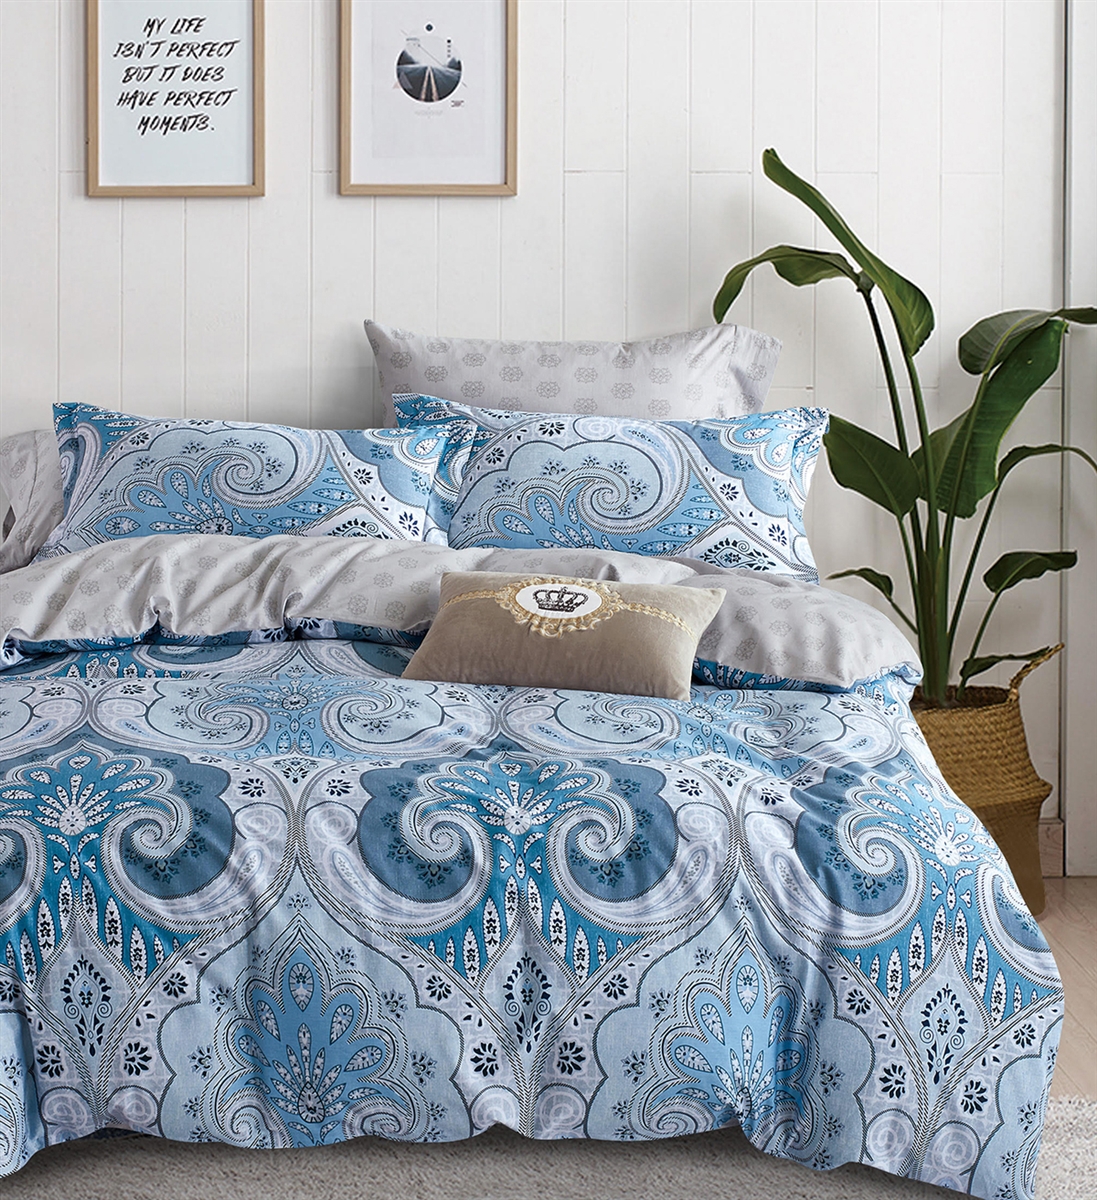 Bedford 8pc 100% Cotton Bedding Set - Discount Luxury Bed Linens